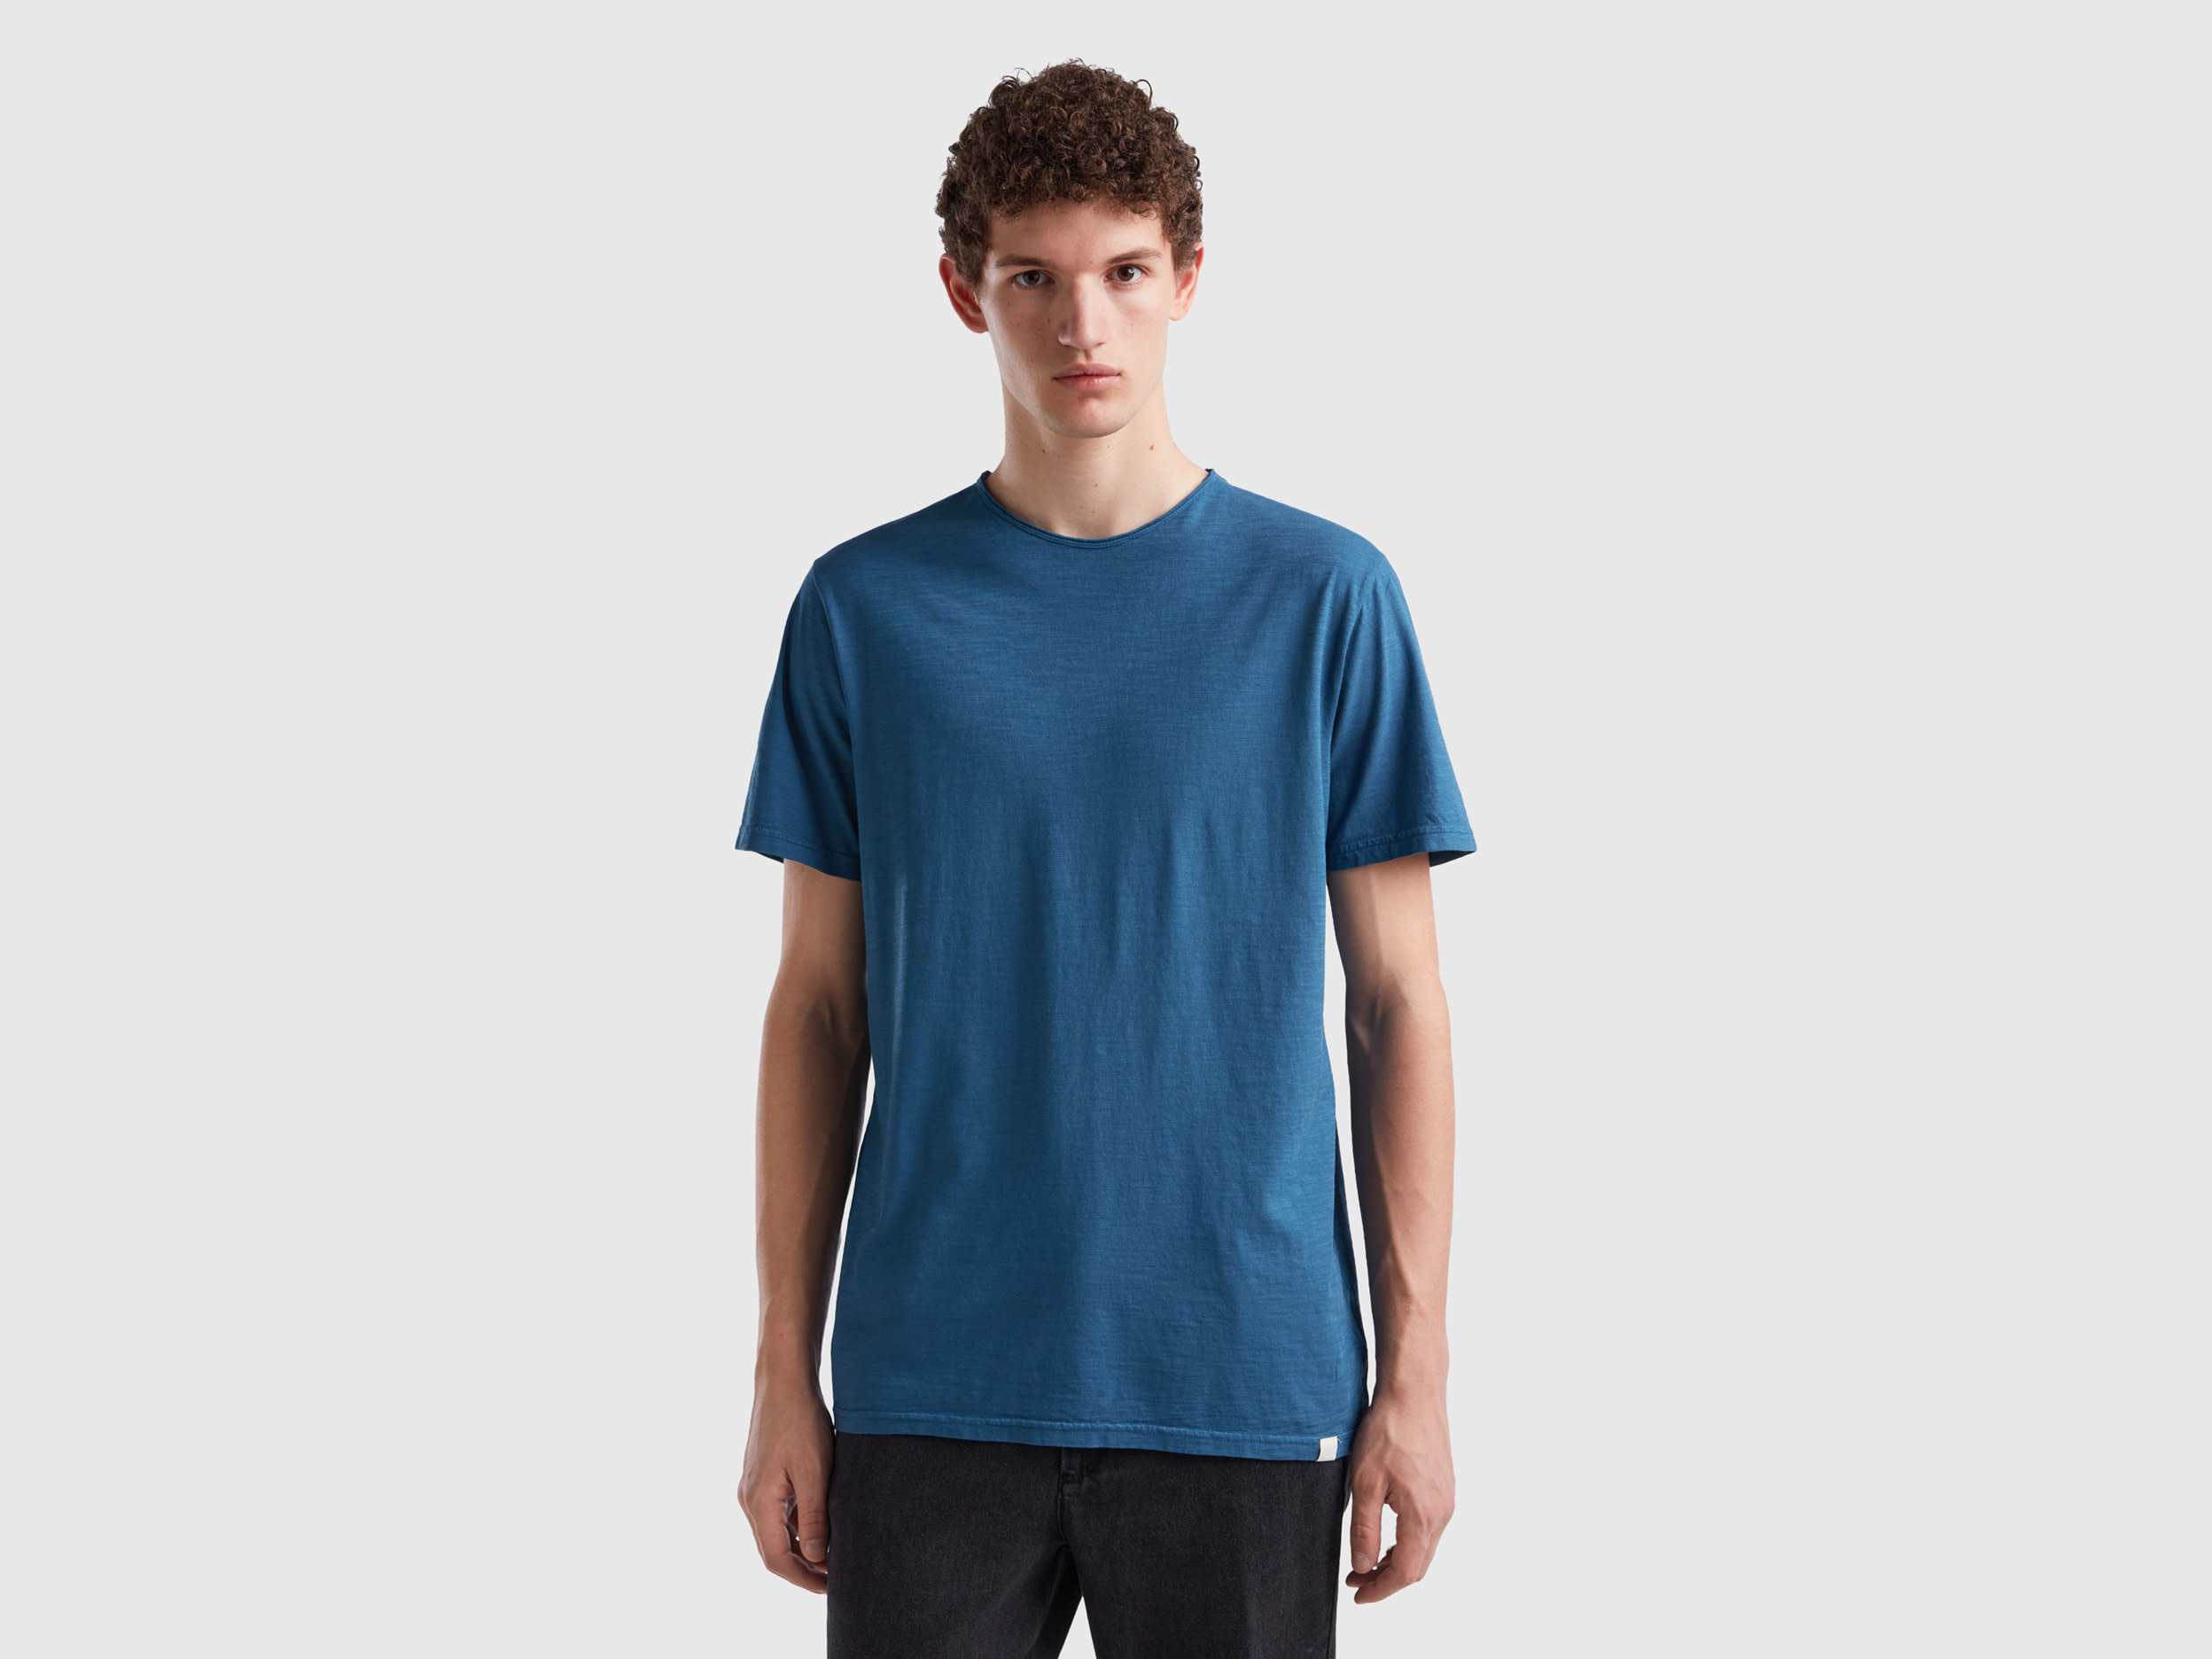 Benetton, Air Force Blue T-shirt In Slub Cotton, size S, Air Force Blue, Men